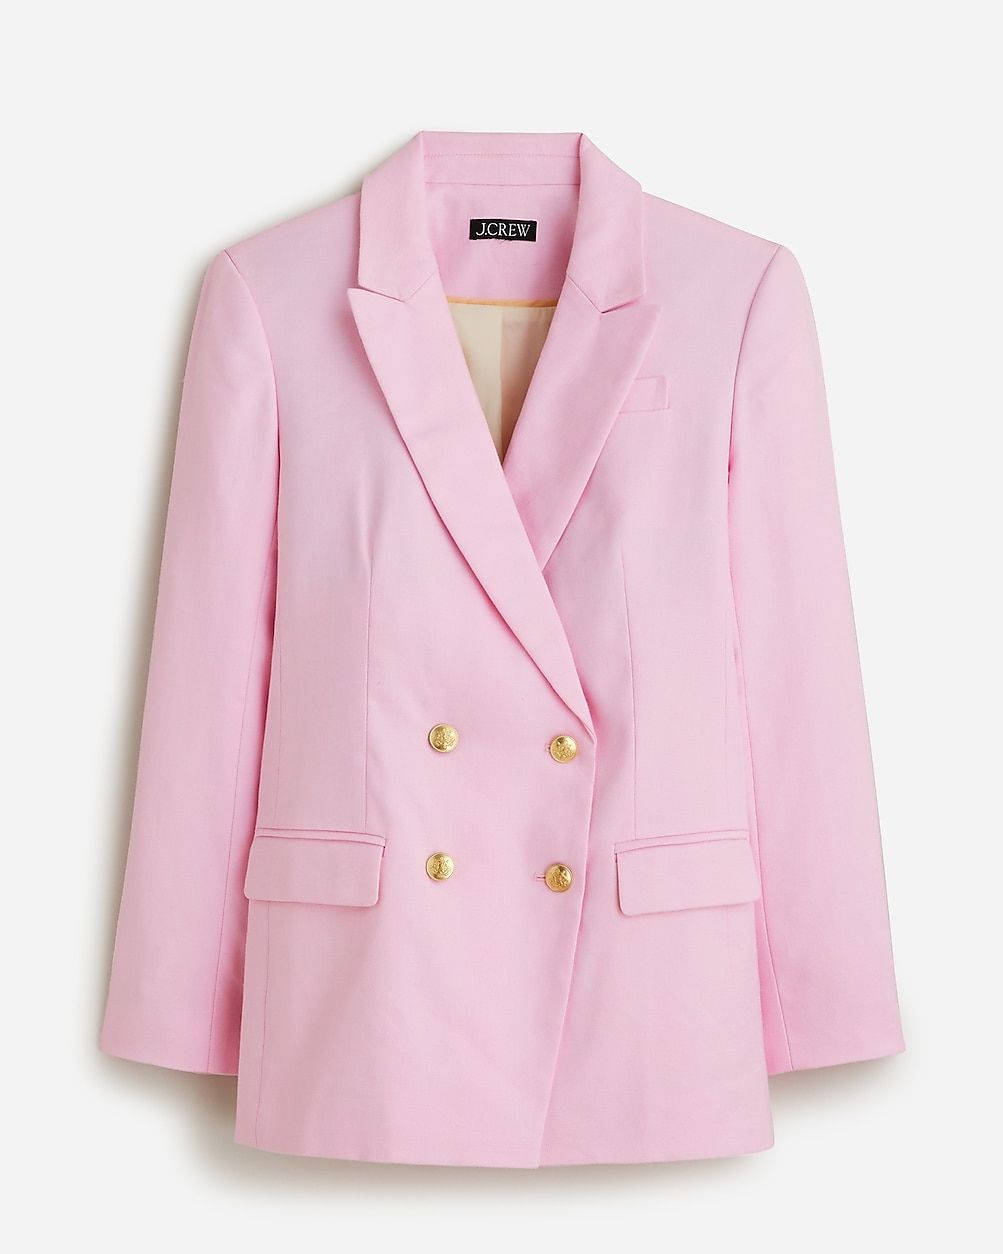 new color5.0(2 REVIEWS)Petite Greta blazer in stretch linen blend$209.50$248.00 (16% Off)Bubblegu... | J.Crew US